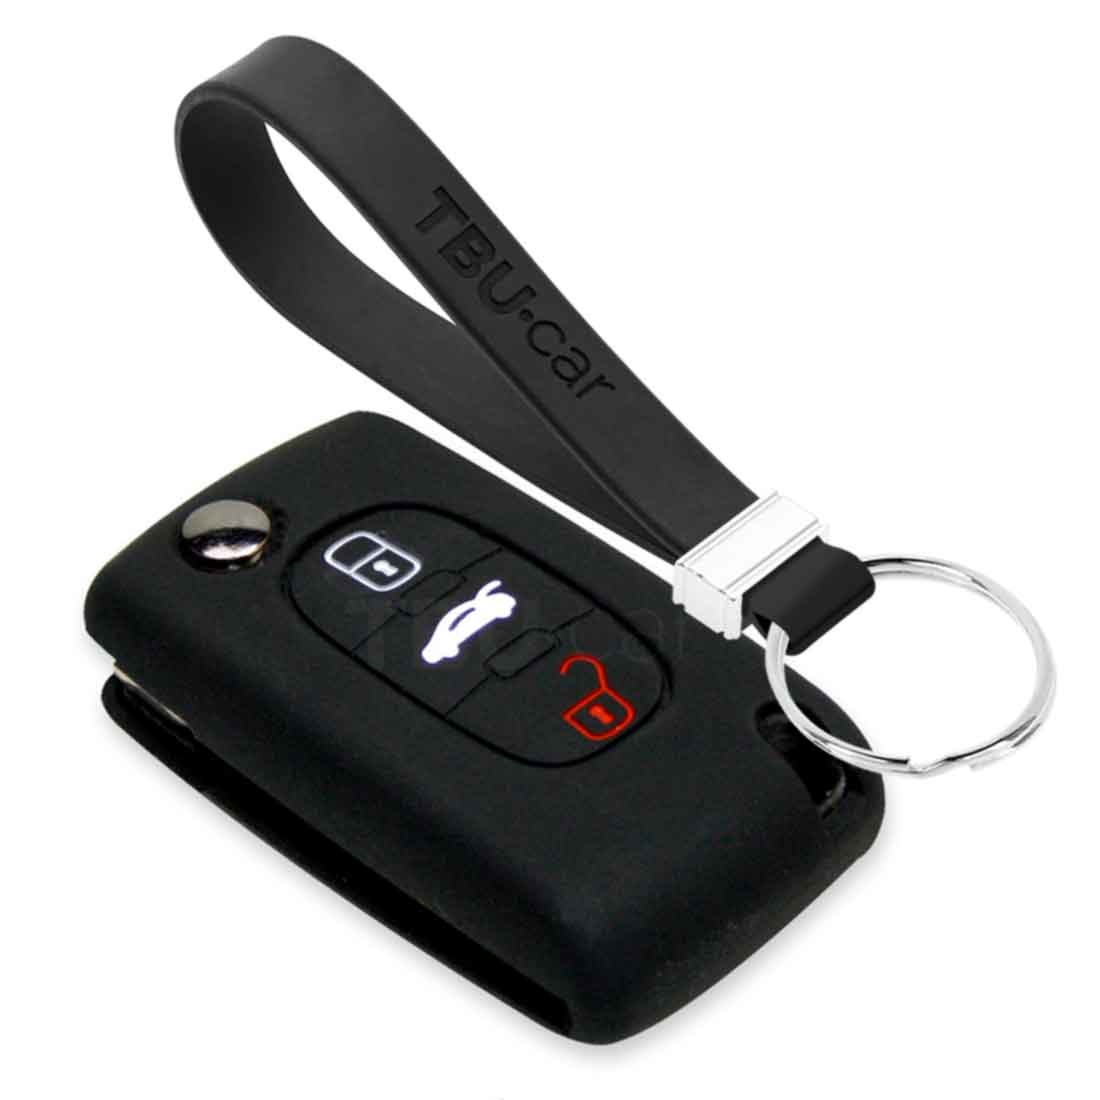 TBU car TBU car Autoschlüssel Hülle kompatibel mit Citroën 3 Tasten - Schutzhülle aus Silikon - Auto Schlüsselhülle Cover in Schwarz